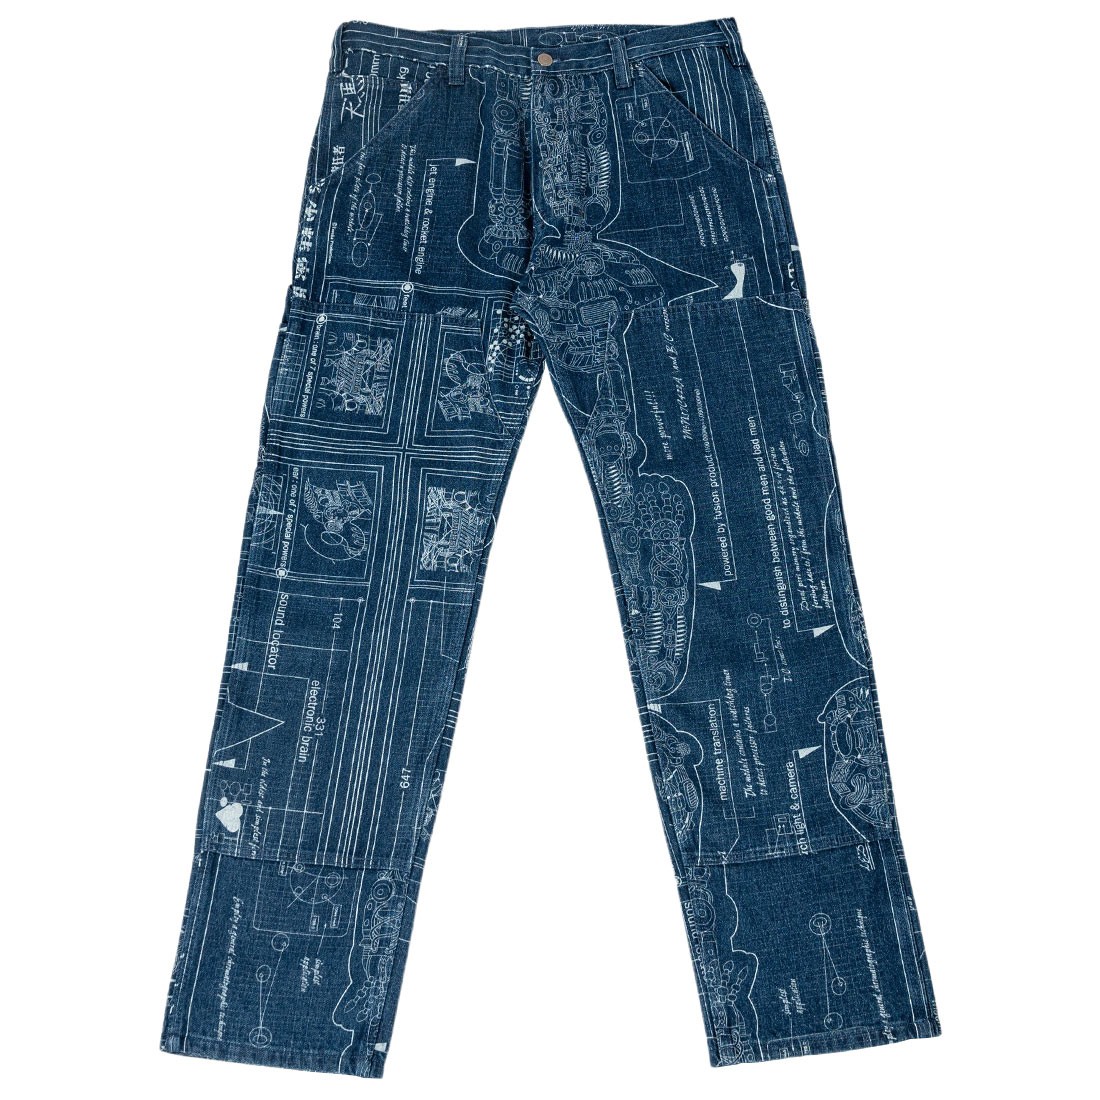 BAIT x Astro Boy Men Denim Jeans (blue)